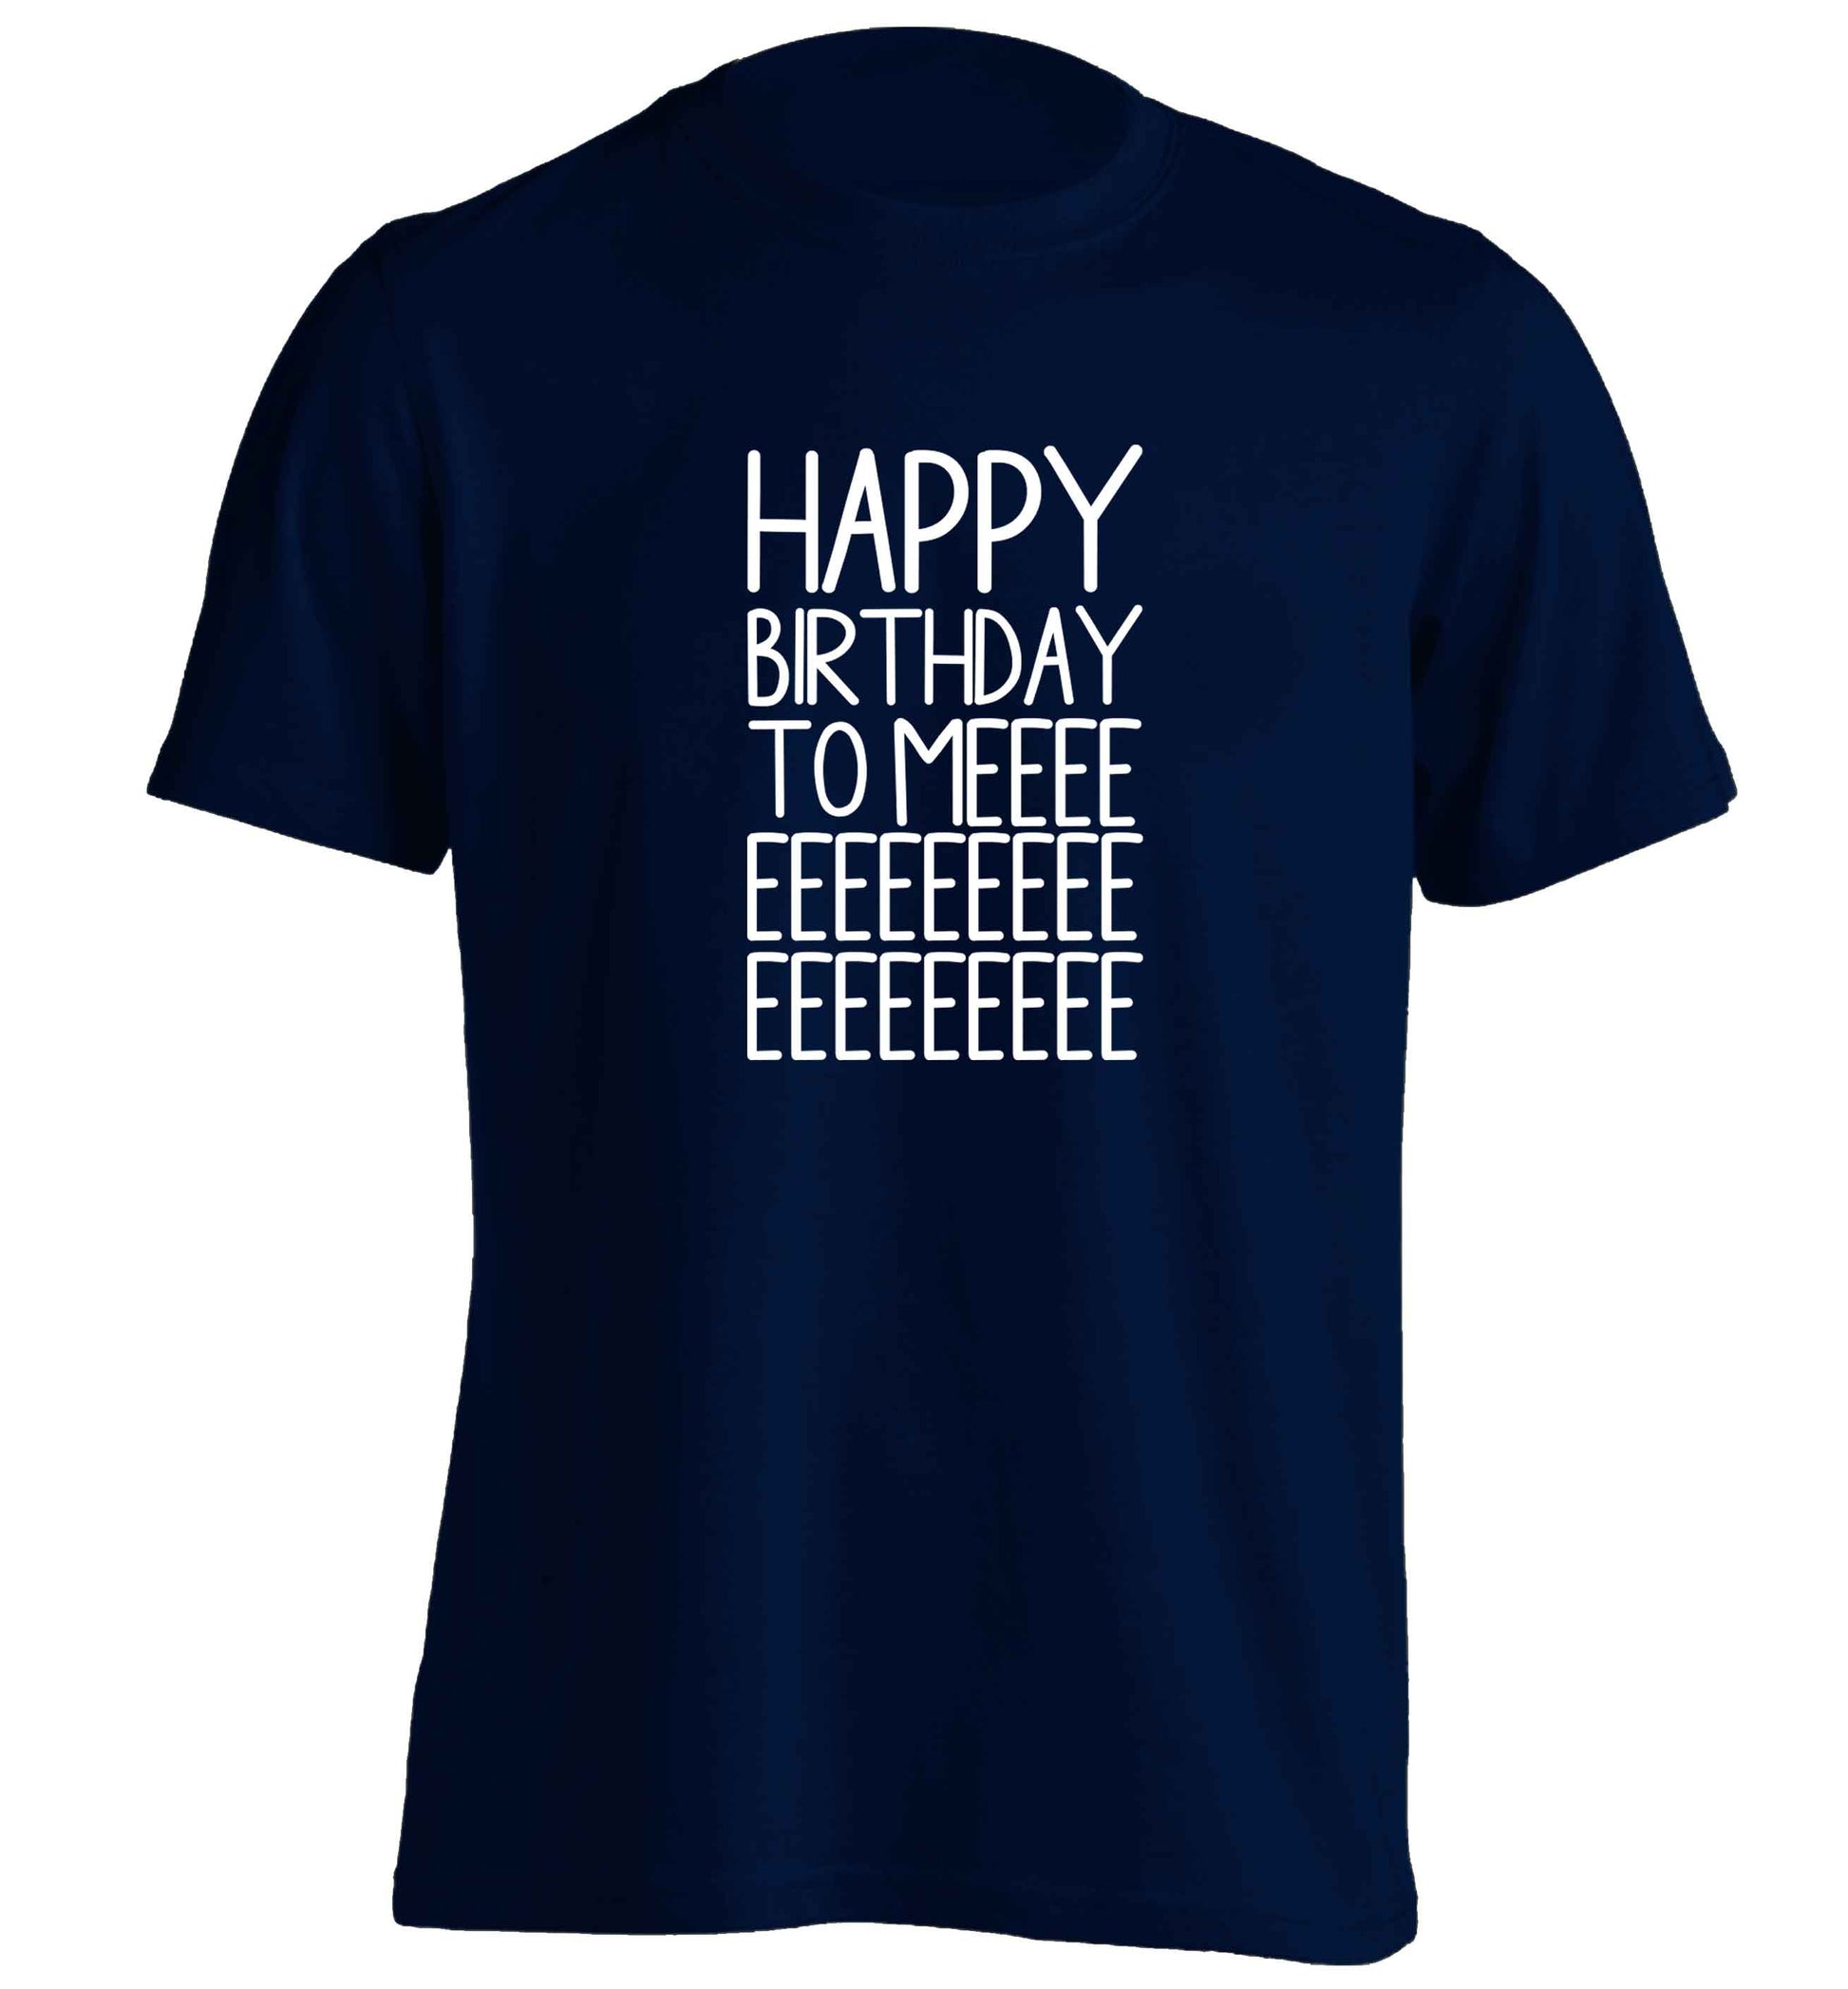 Happy birthday to me adults unisex navy Tshirt 2XL